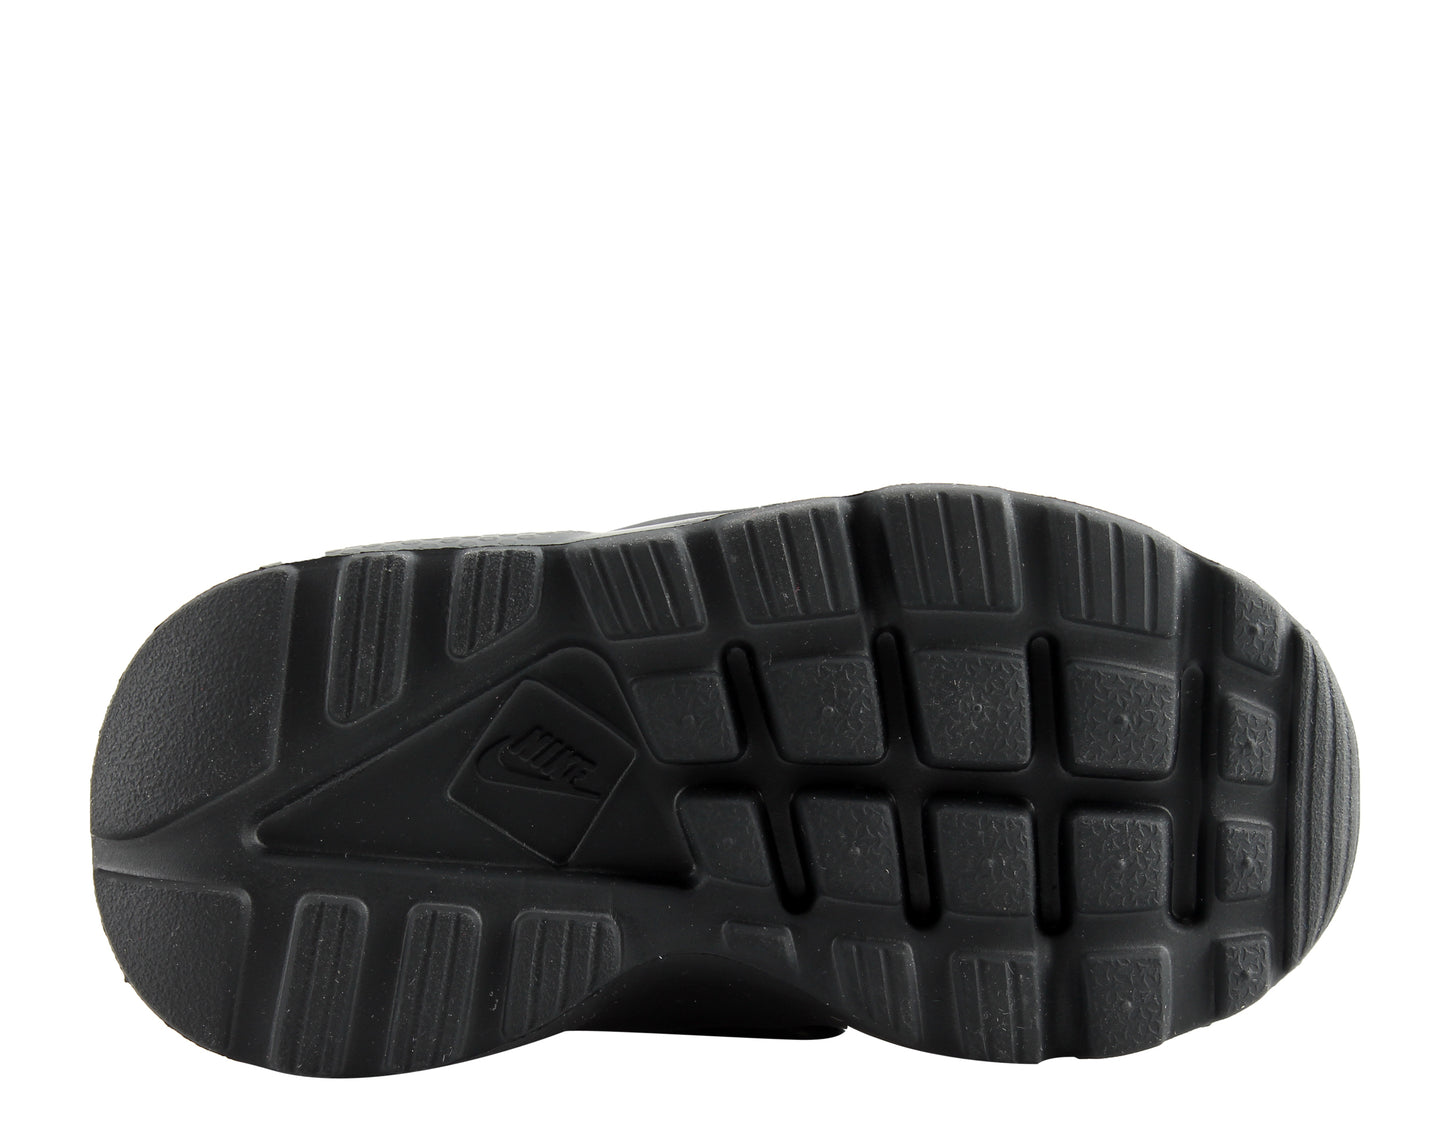 Nike Air Huarache Run Ultra (TD) Black Toddler Kids Running Shoes 859594-004